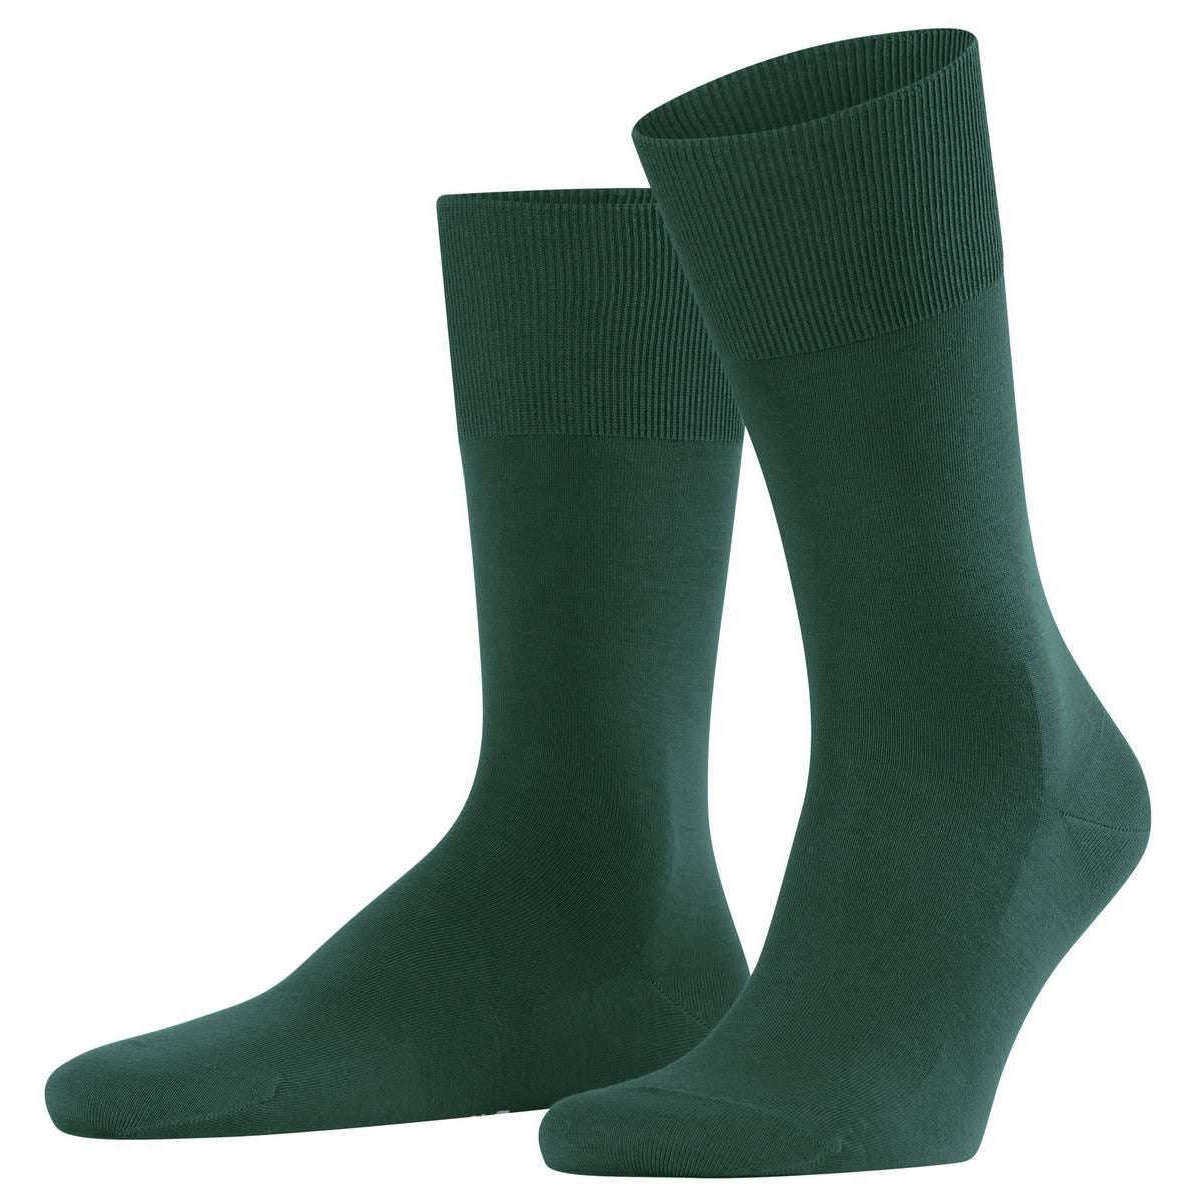 Falke Climawool Socks - Hunter Green - Medium - 8.5-9.5 UK | 9.5-10.5 US | 43-44 EUR